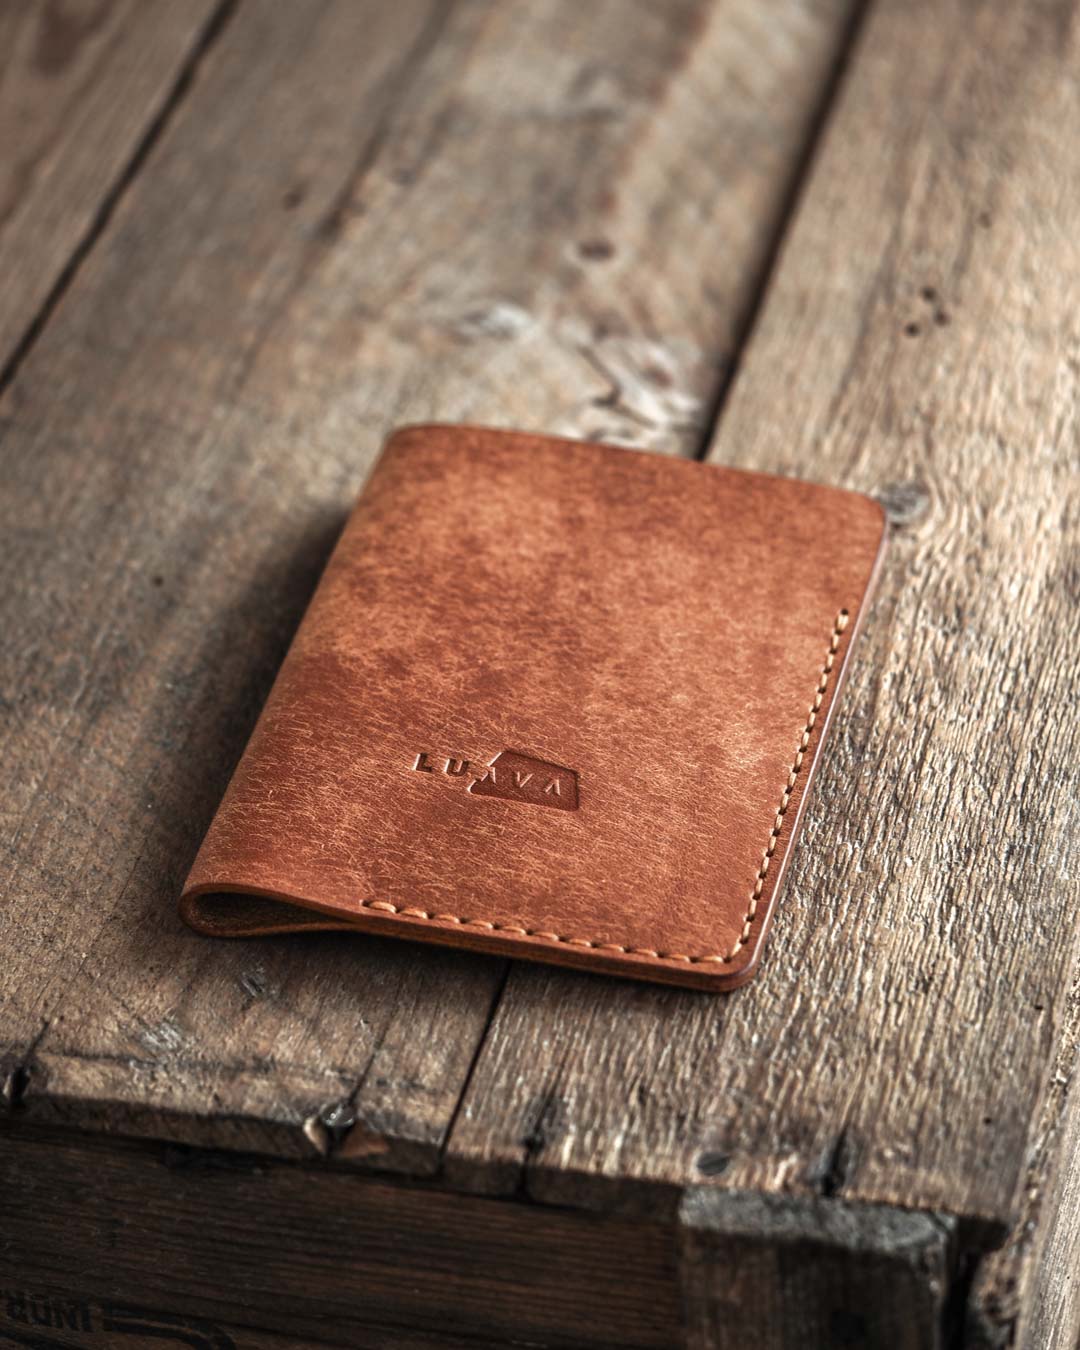 Luava handmade leather passport cover. color cognac. front